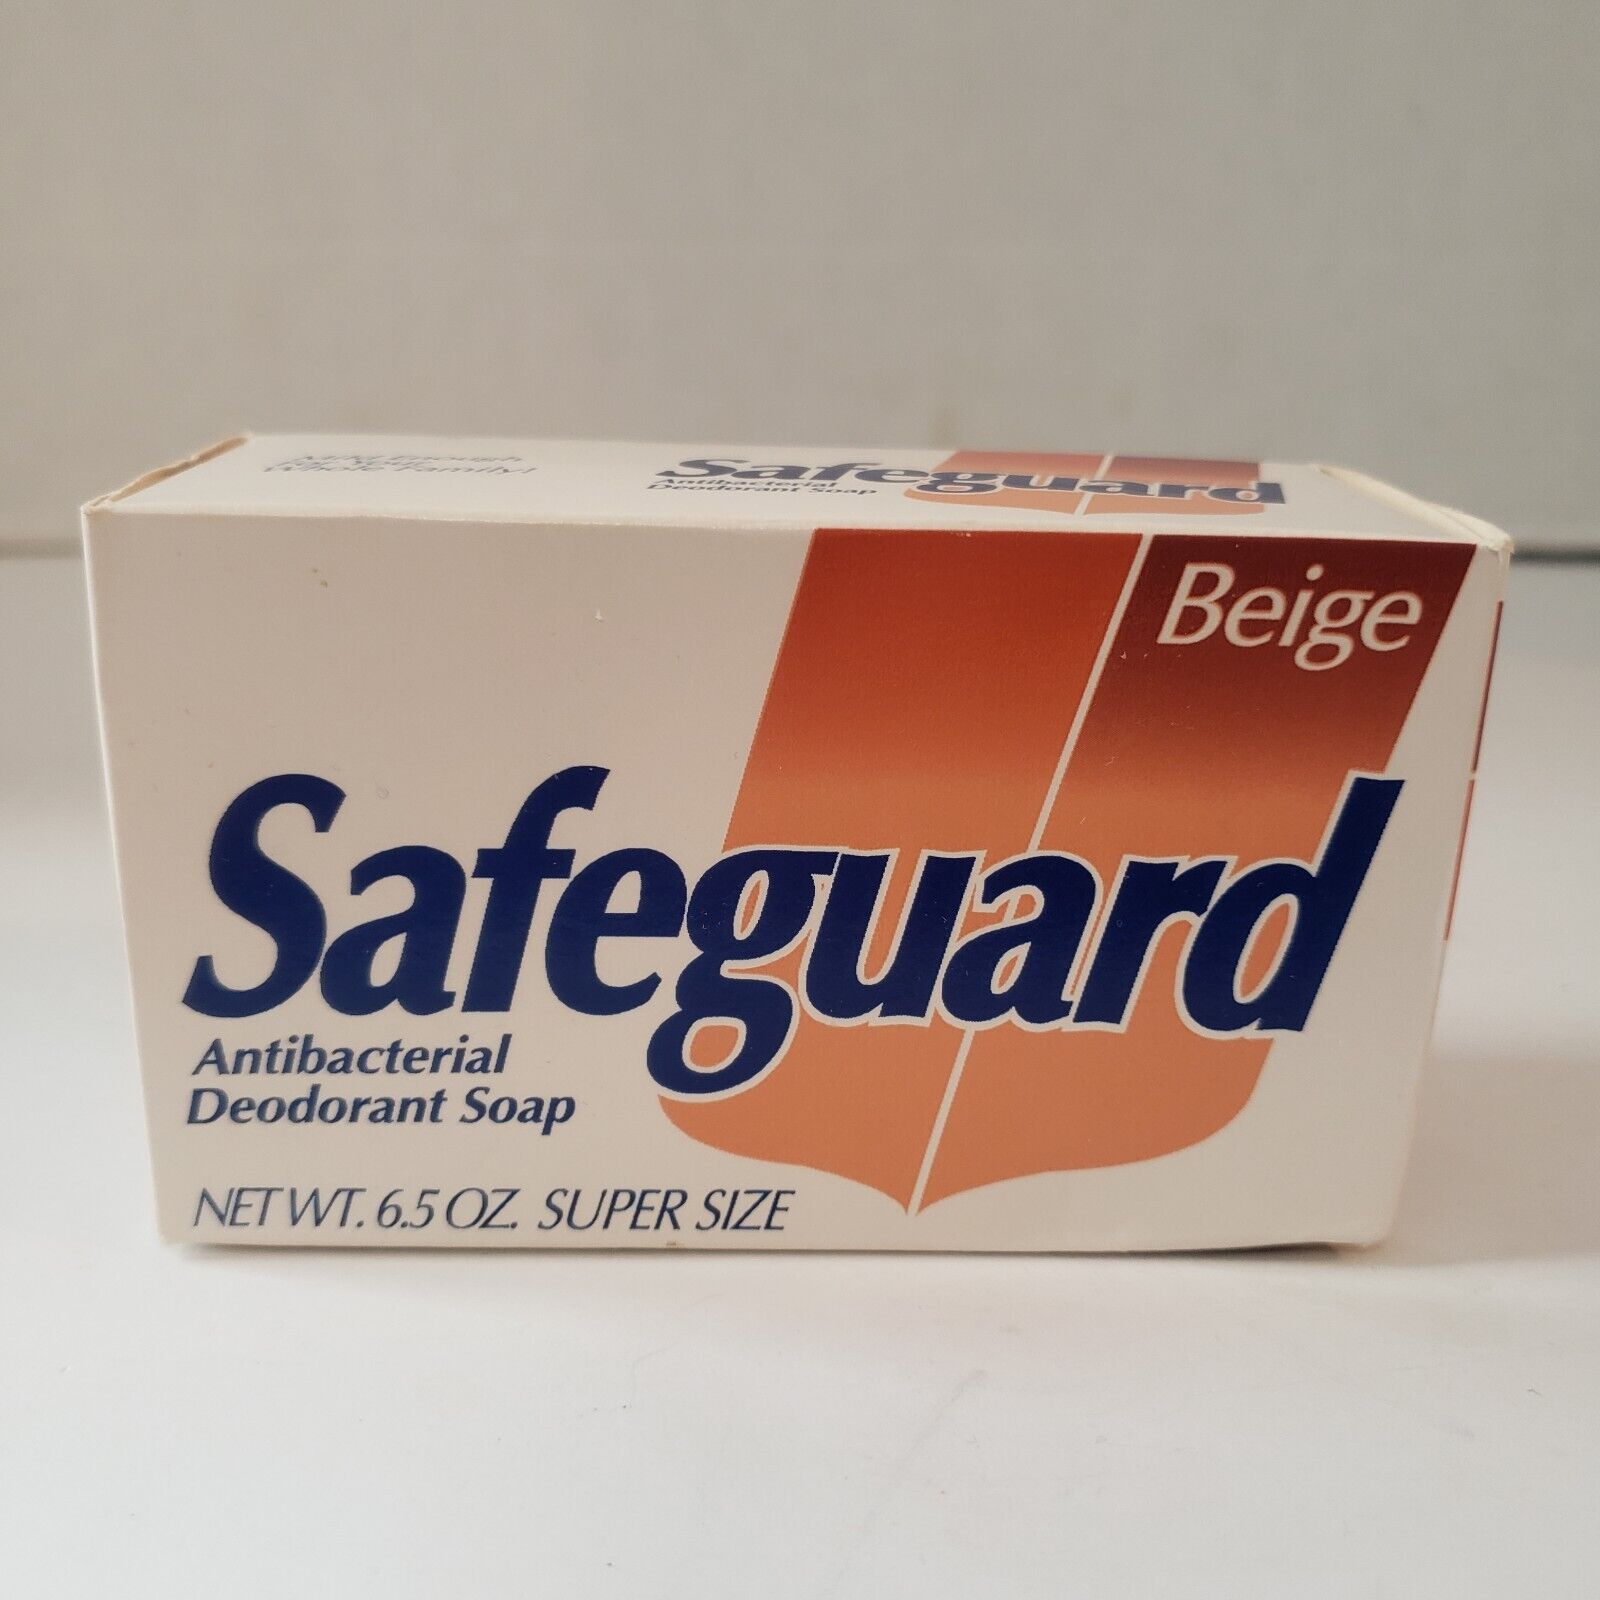 Vtg 1991 SAFEGAURD Deodorant Soap BEIGE Super Size 6.5 oz. NOS Movie Prop 